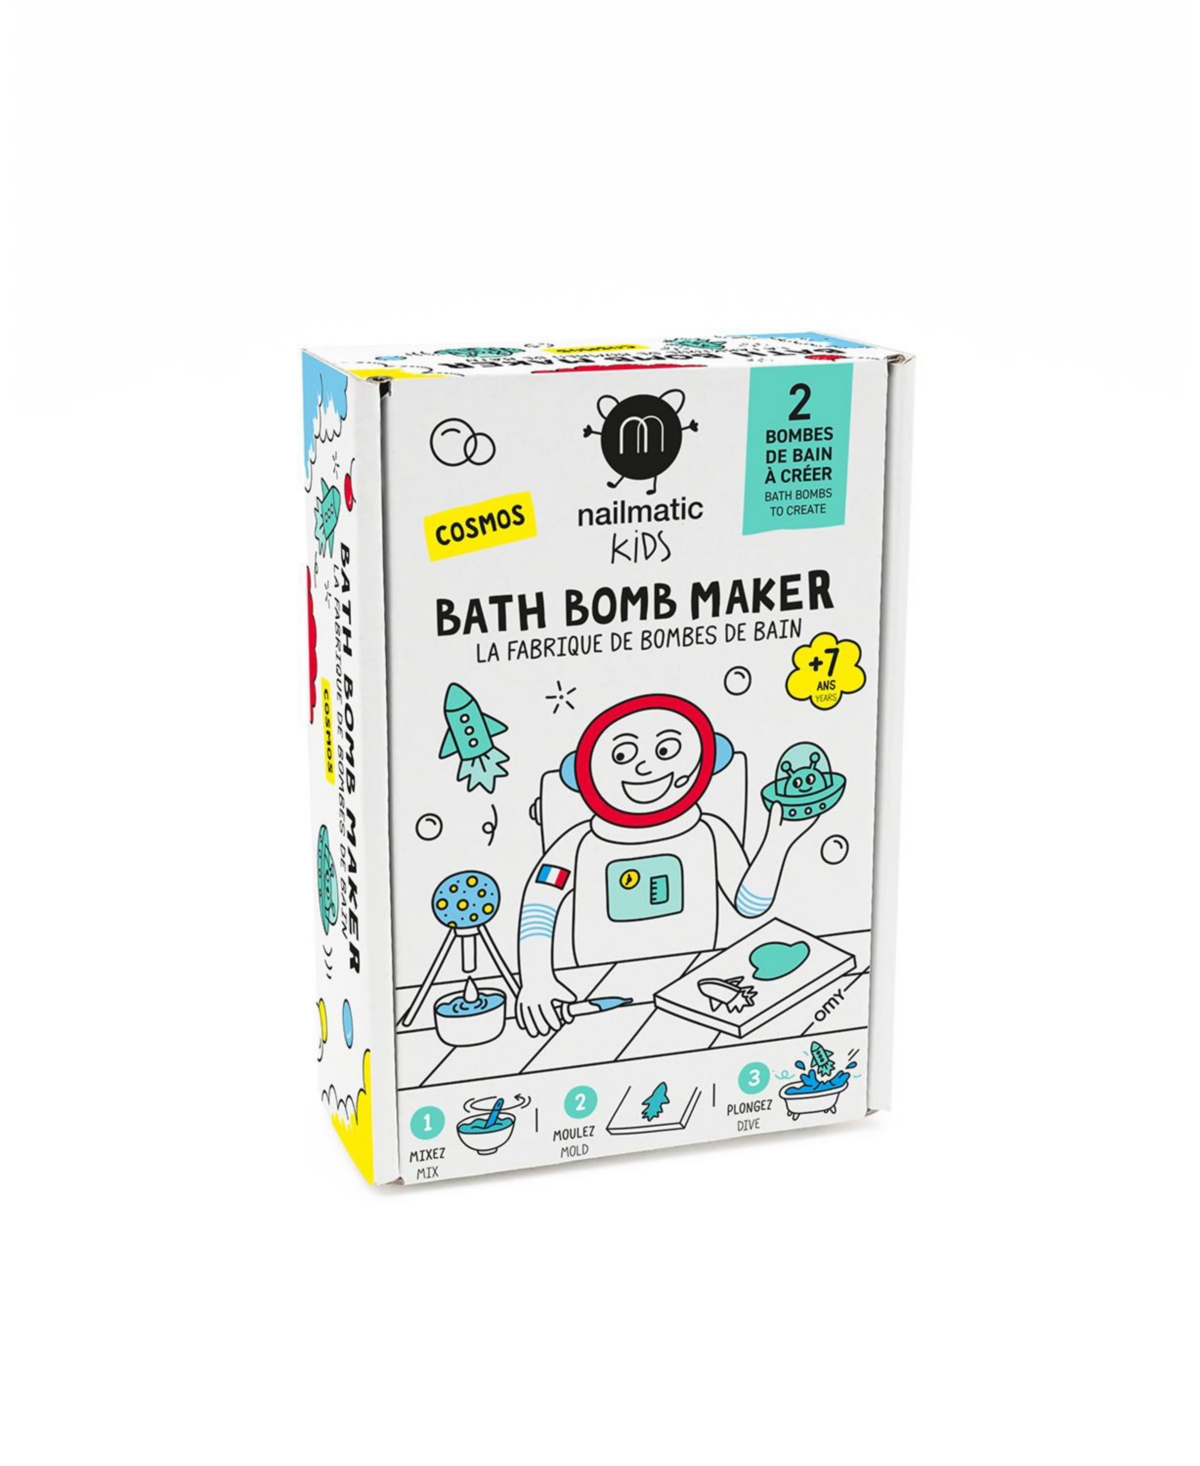 Diy bath bomb maker Cosmos - Assorted Pre-Pack